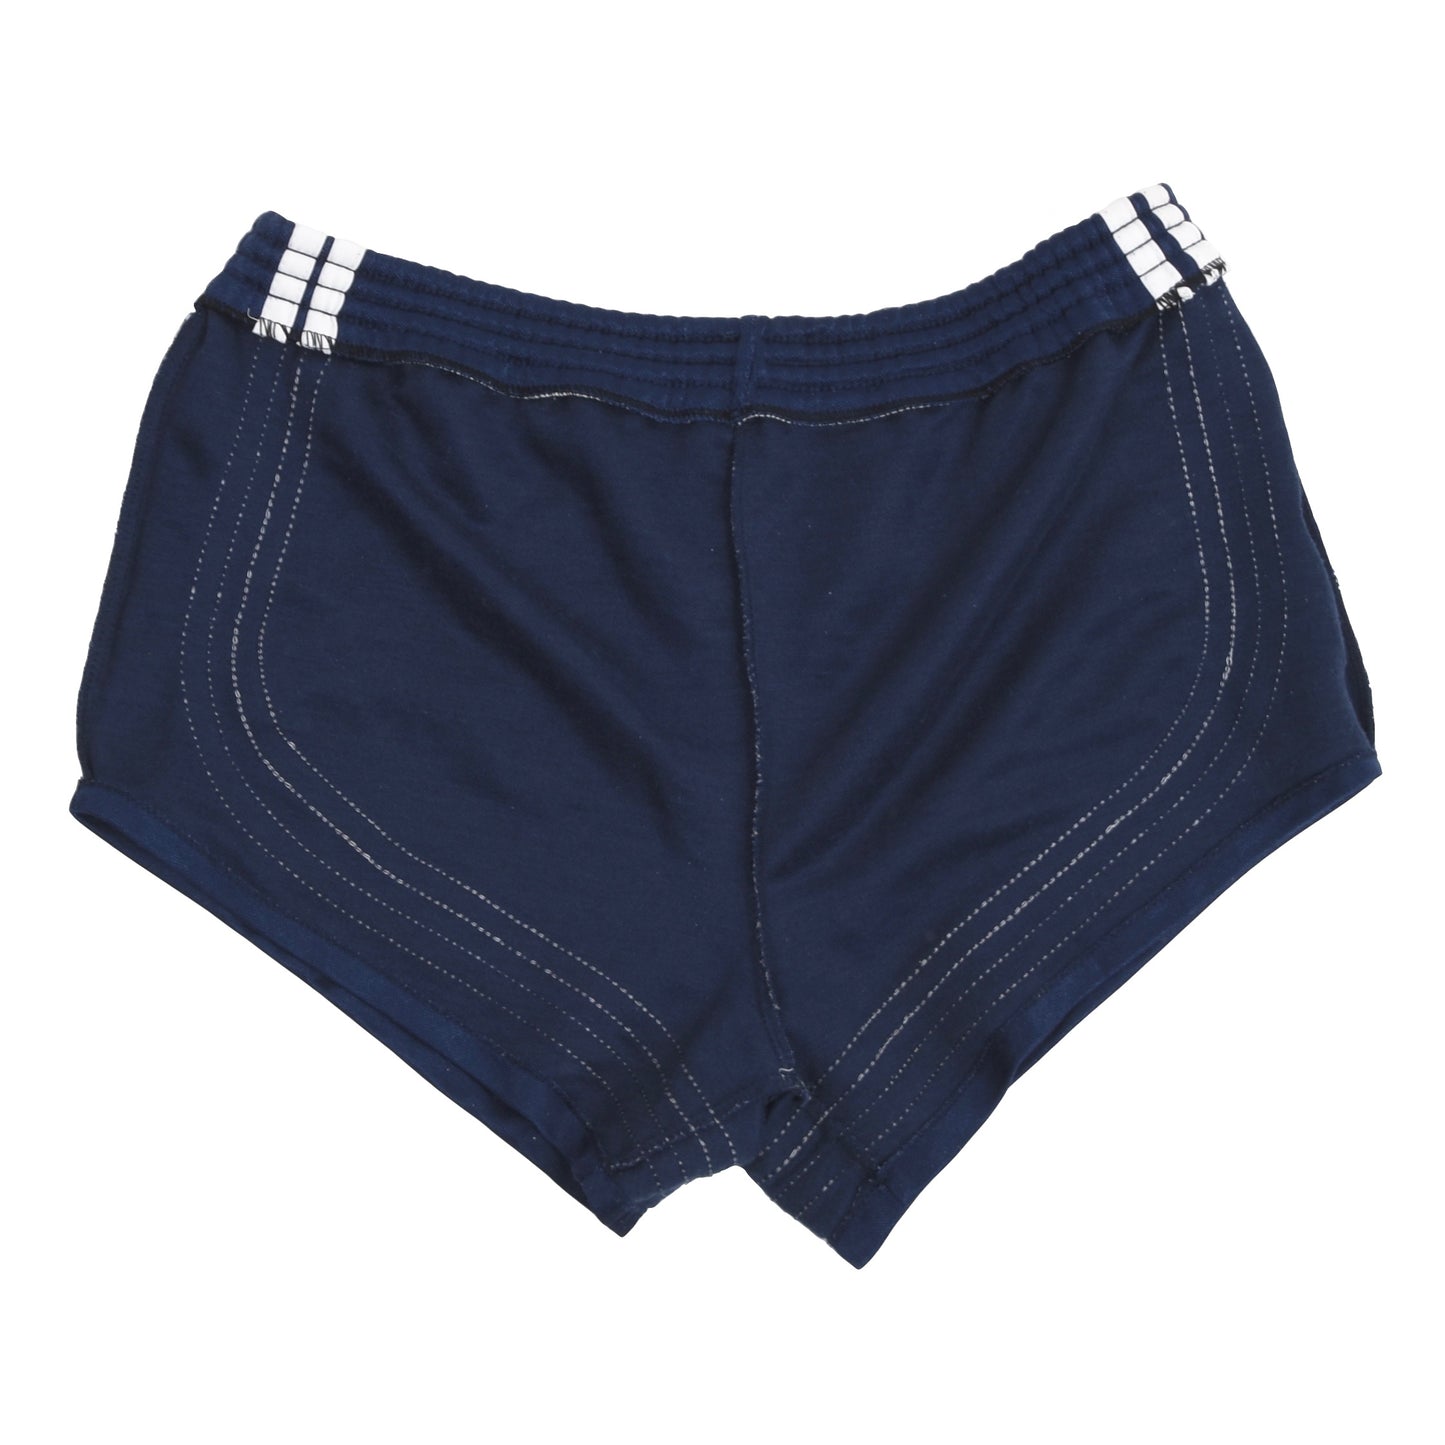 Vintage Gold's Gym Shorts - Marineblau